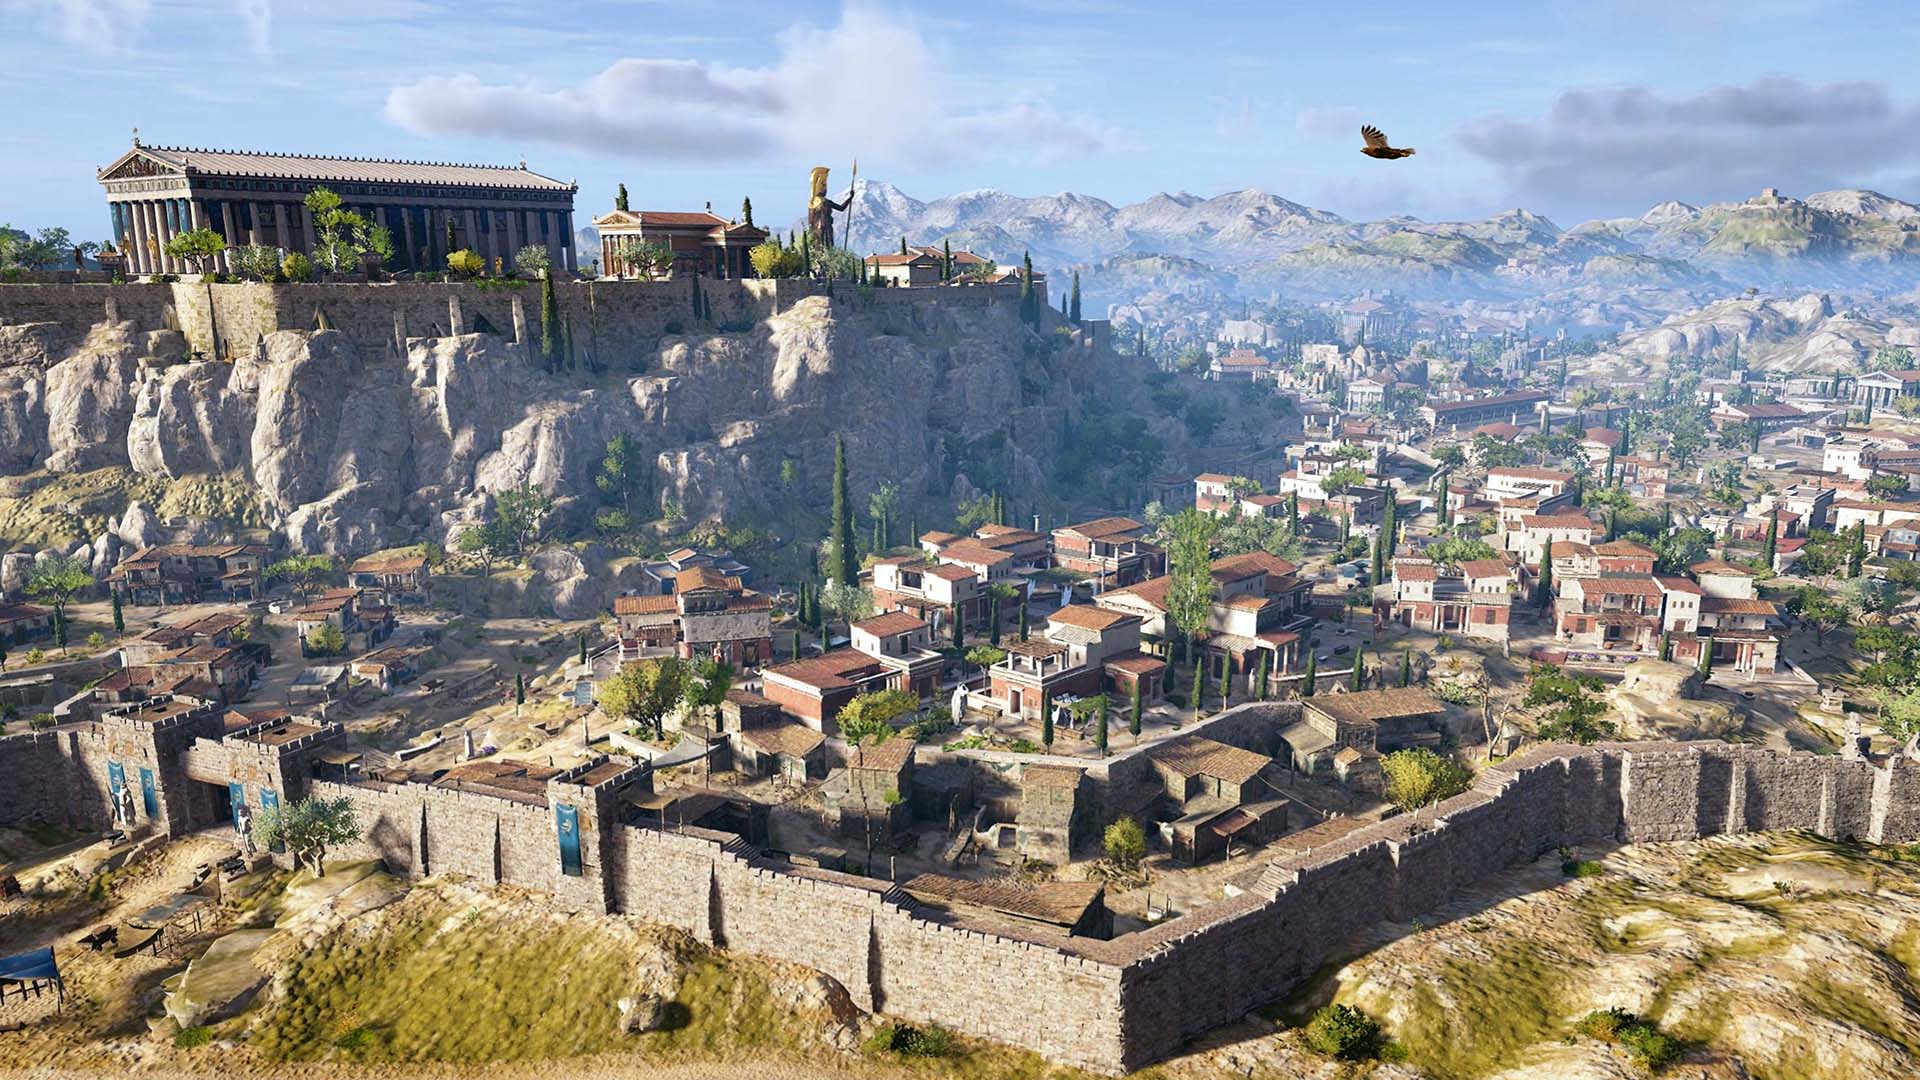 Assassin's Creed Odyssey | Ubisoft | GameStop